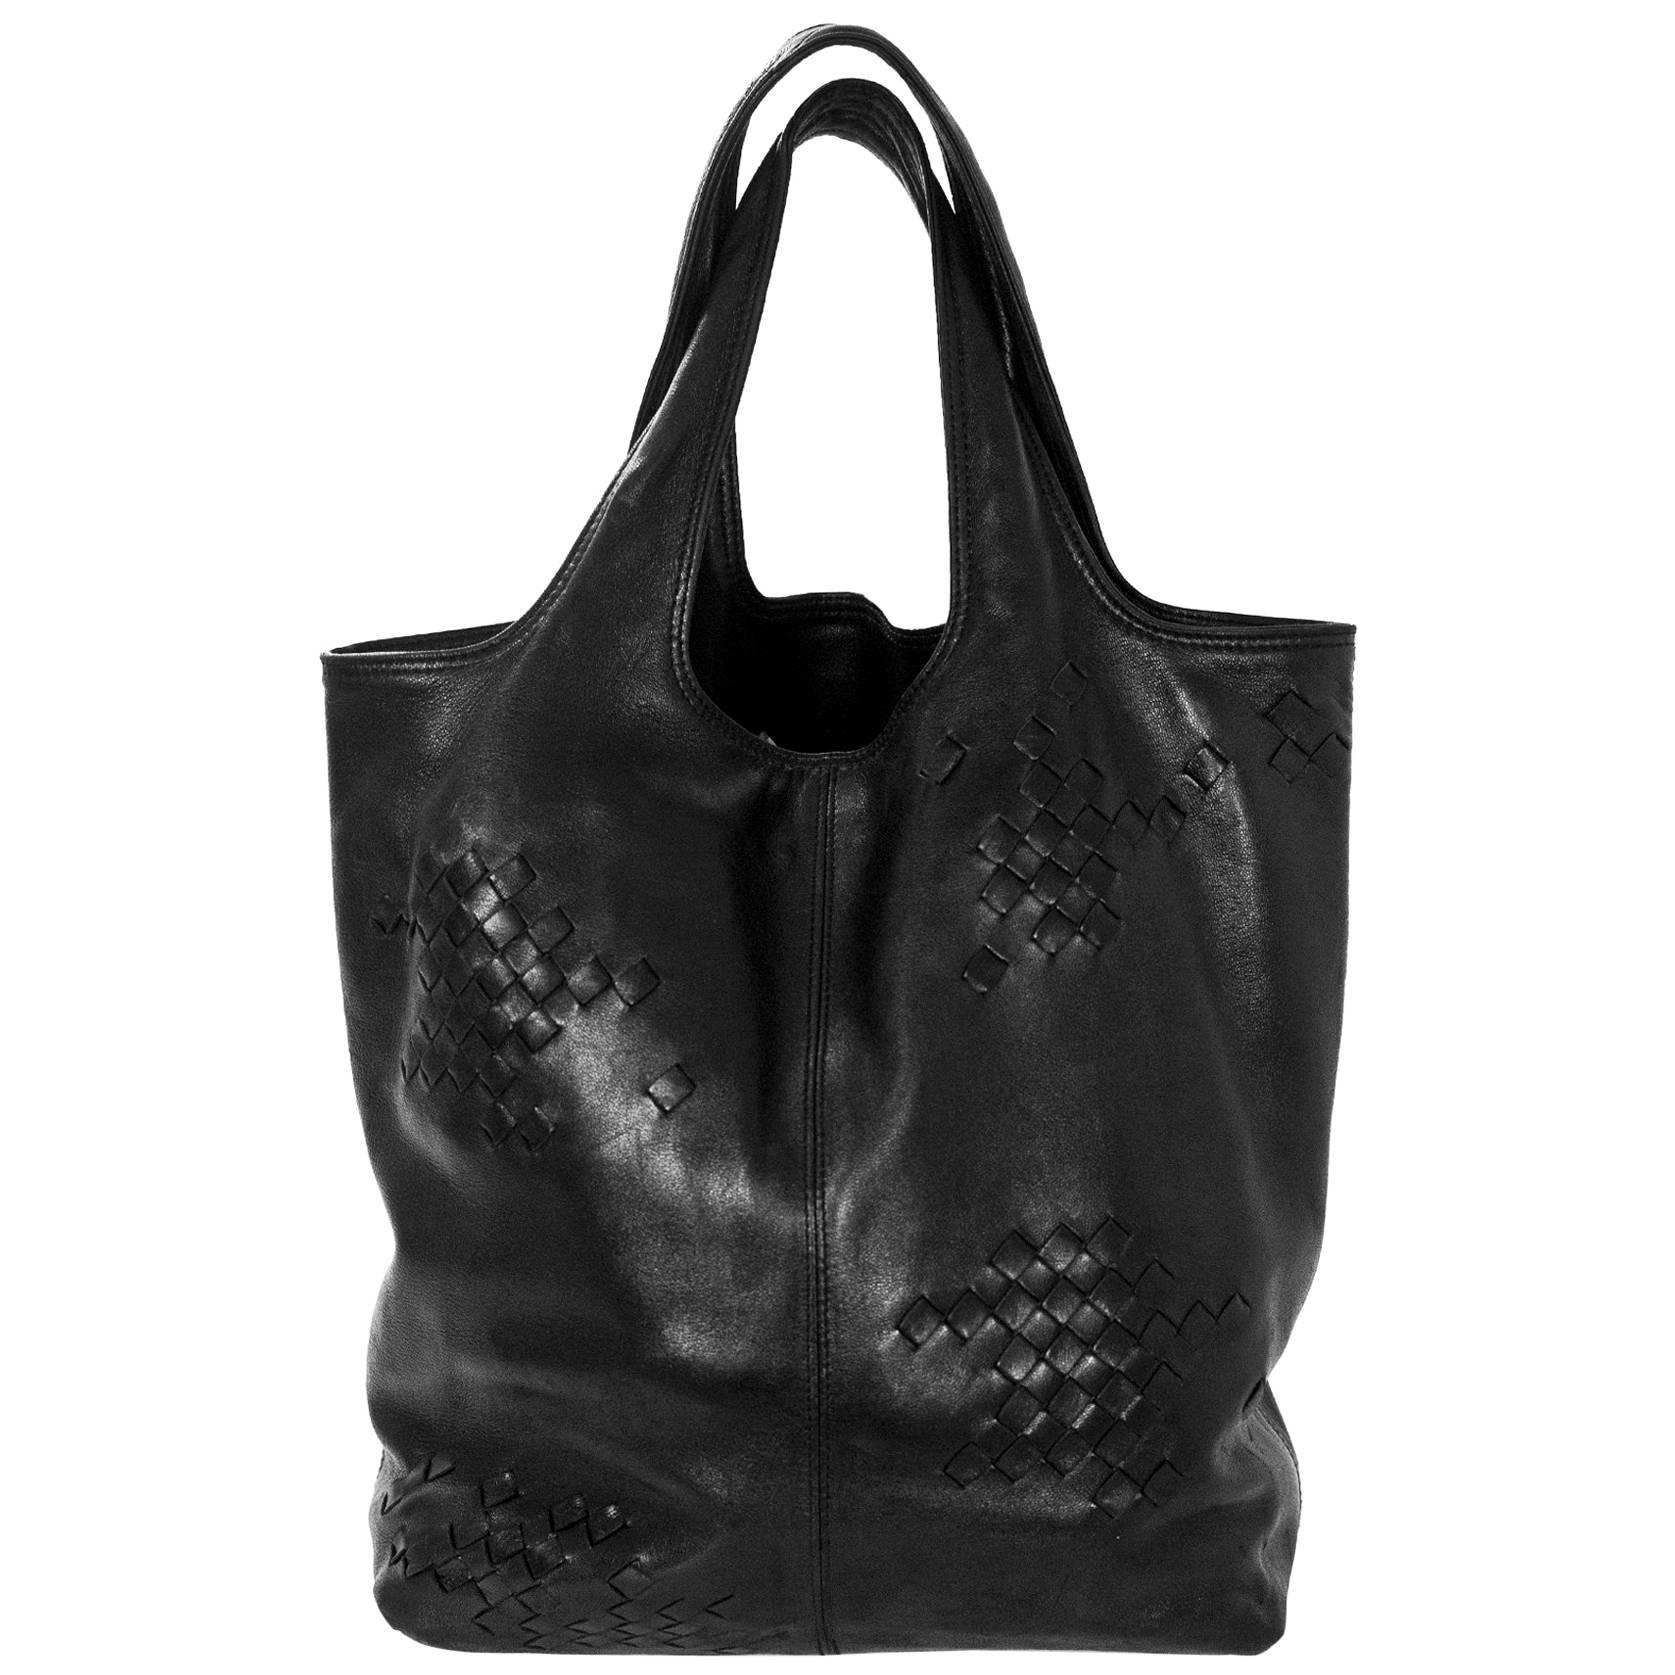 Bottega Veneta Black Leather & Intrecciato Woven Tote Bag